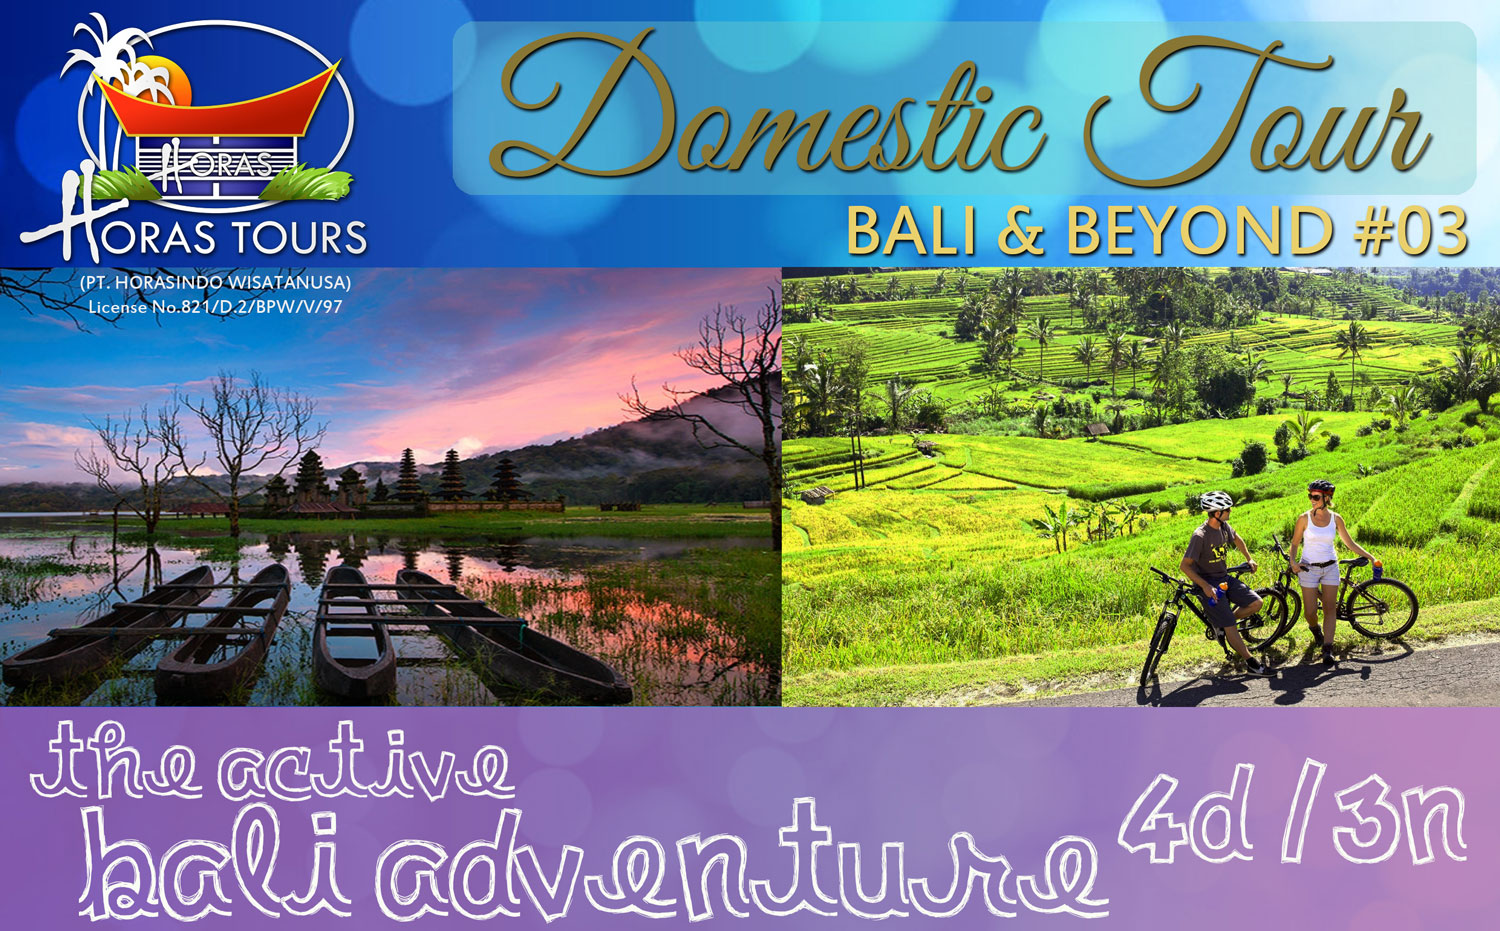 Adventure Bali Holiday